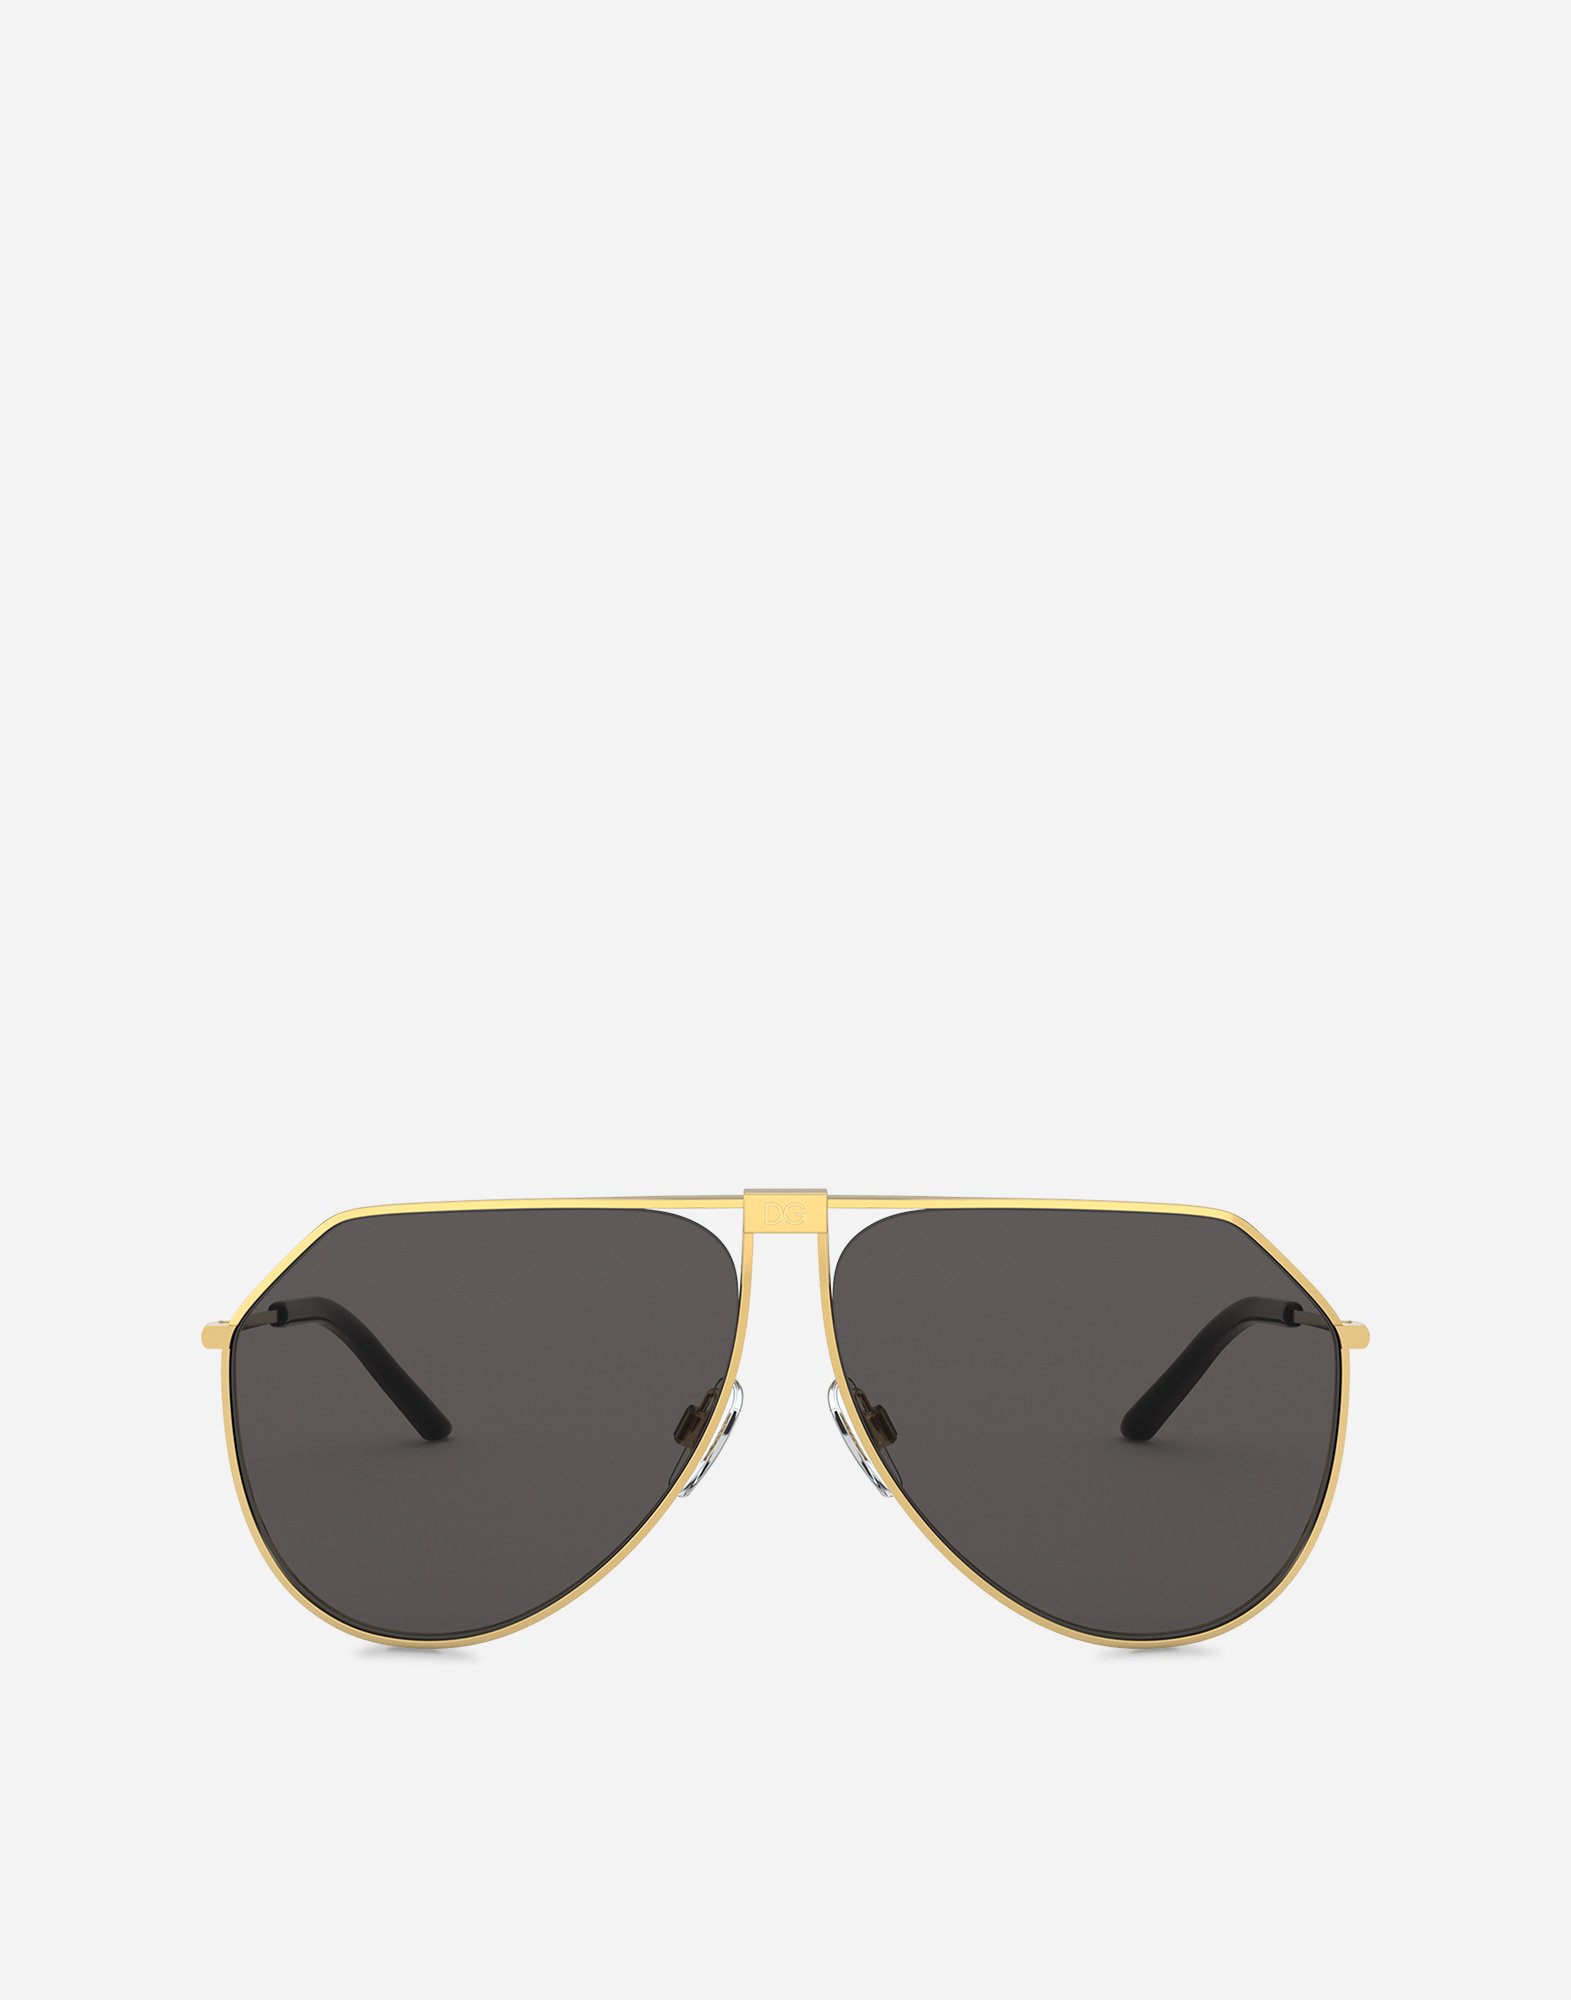 Slim sunglasses in Gold